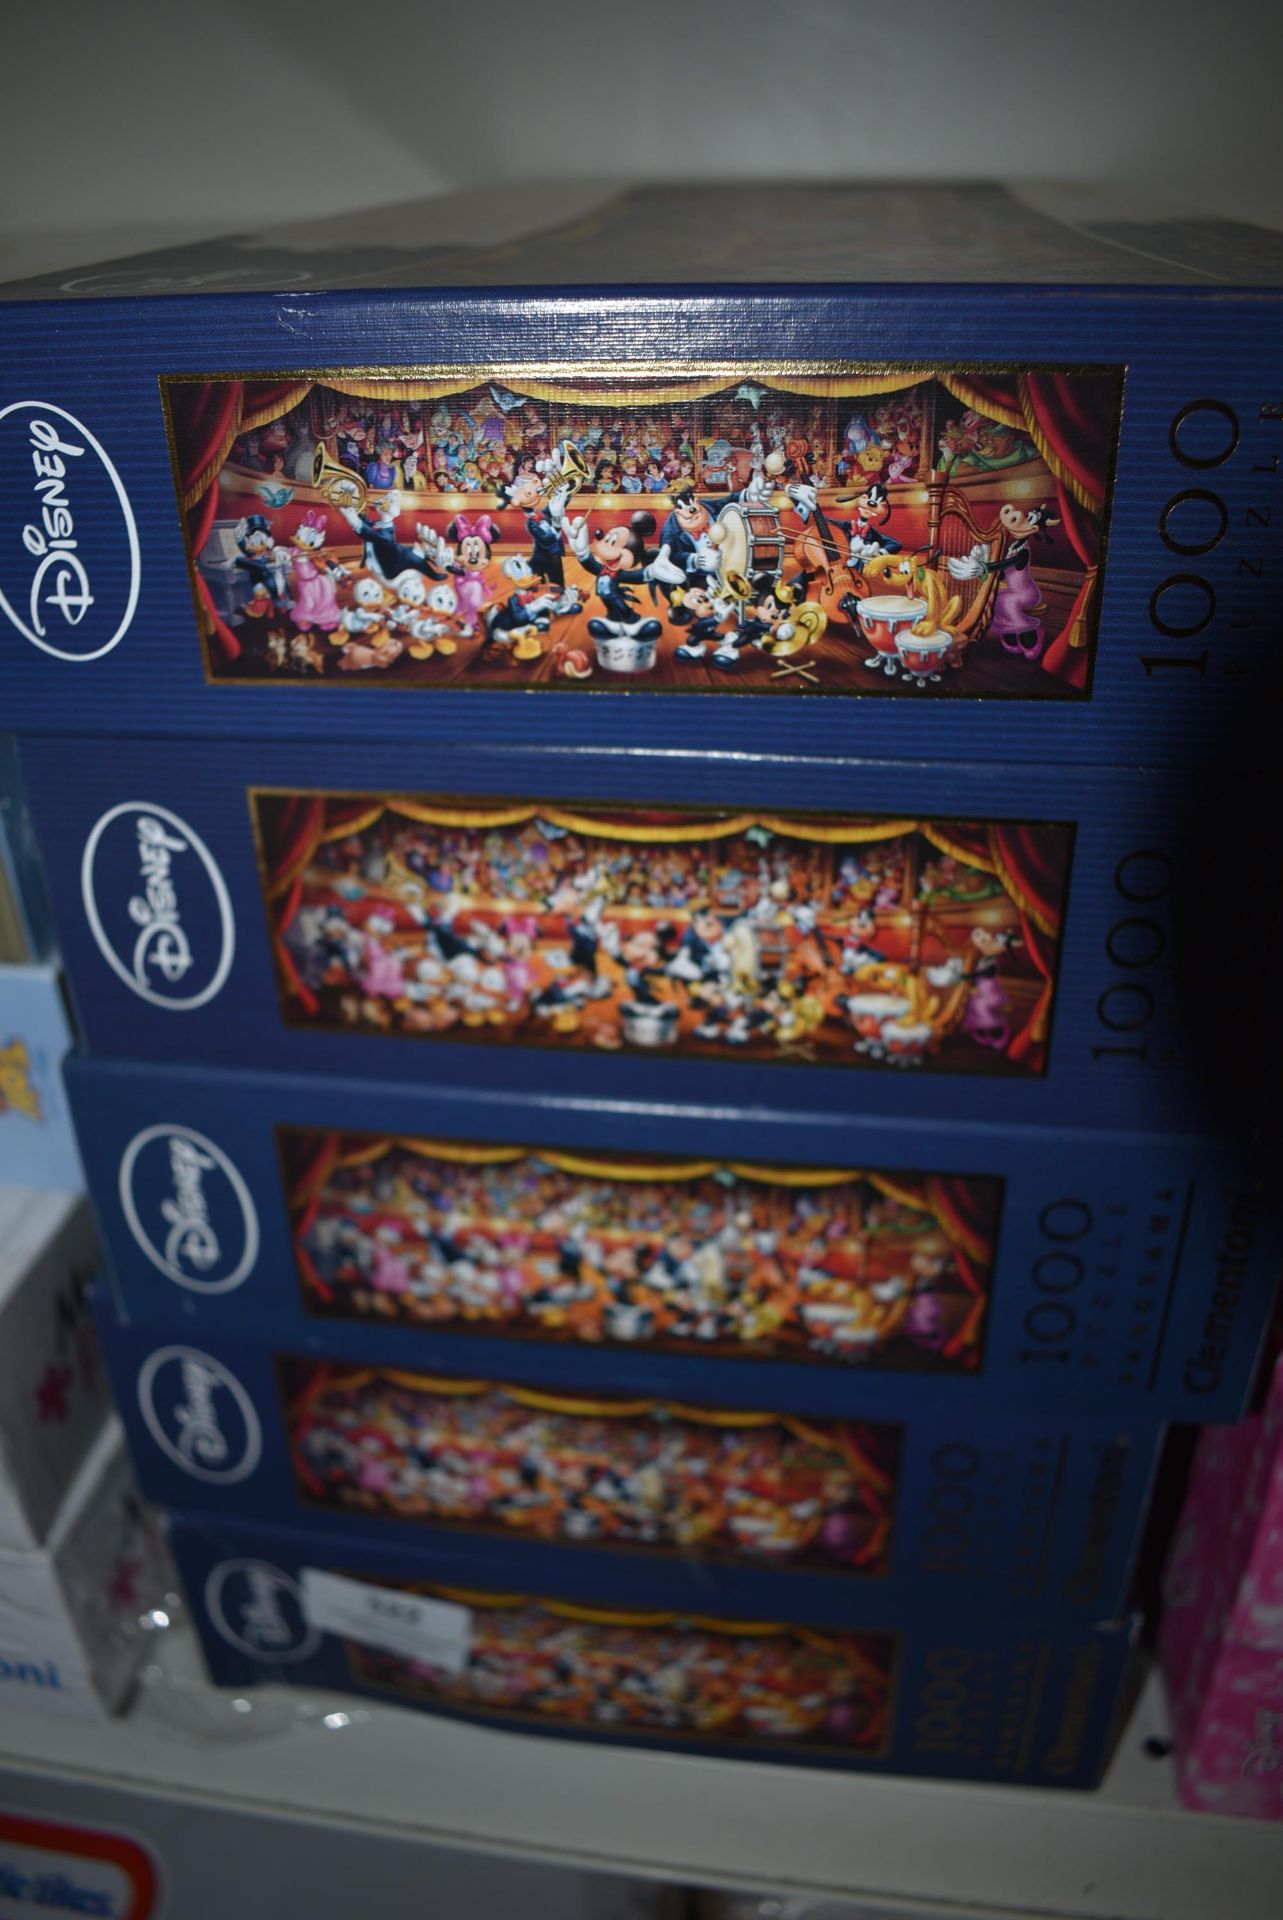 Five Disney Panorama 1000pc Jigsaw Puzzles - Image 2 of 4